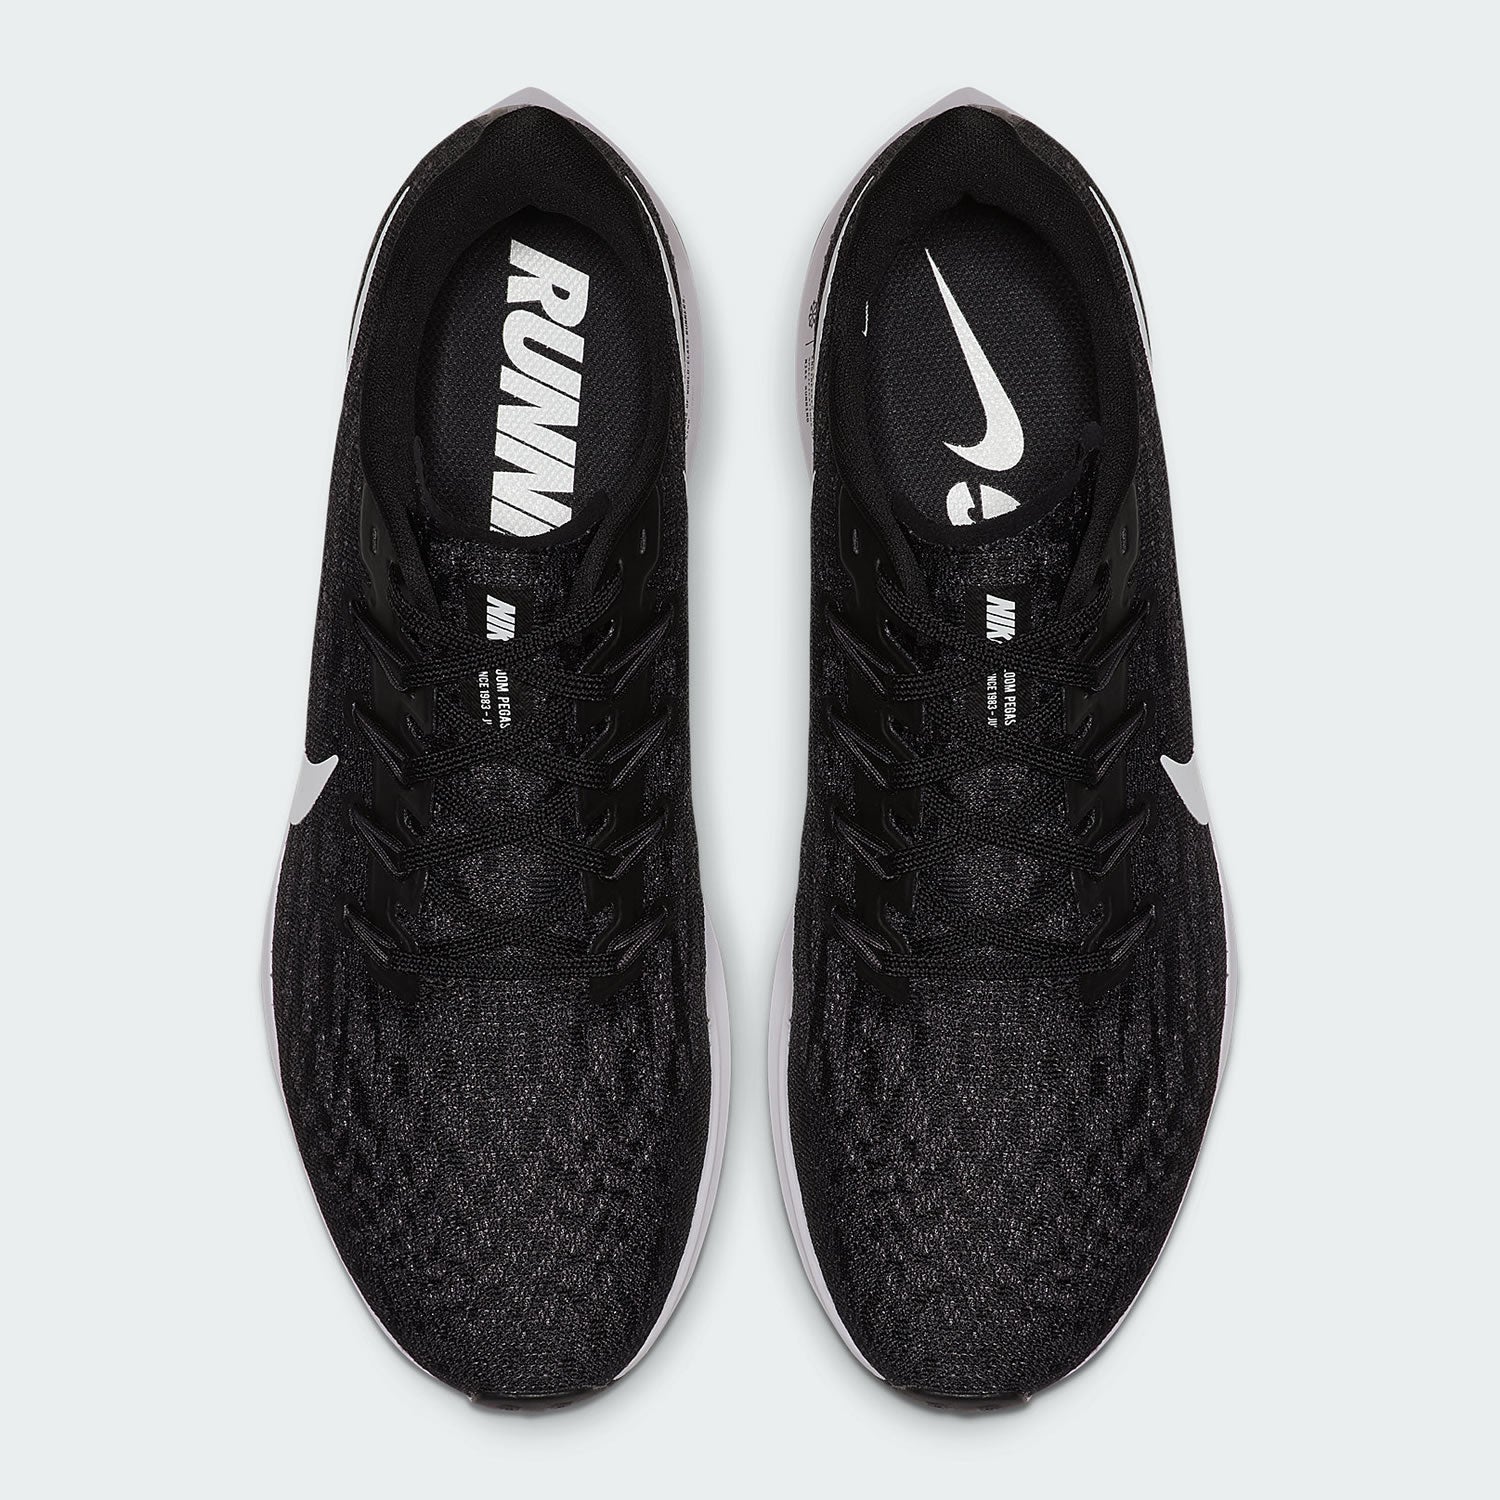 tradesports.co.uk Nike Men's Air Zoom Pegasus 36 Shoes AQ2203 002 Black